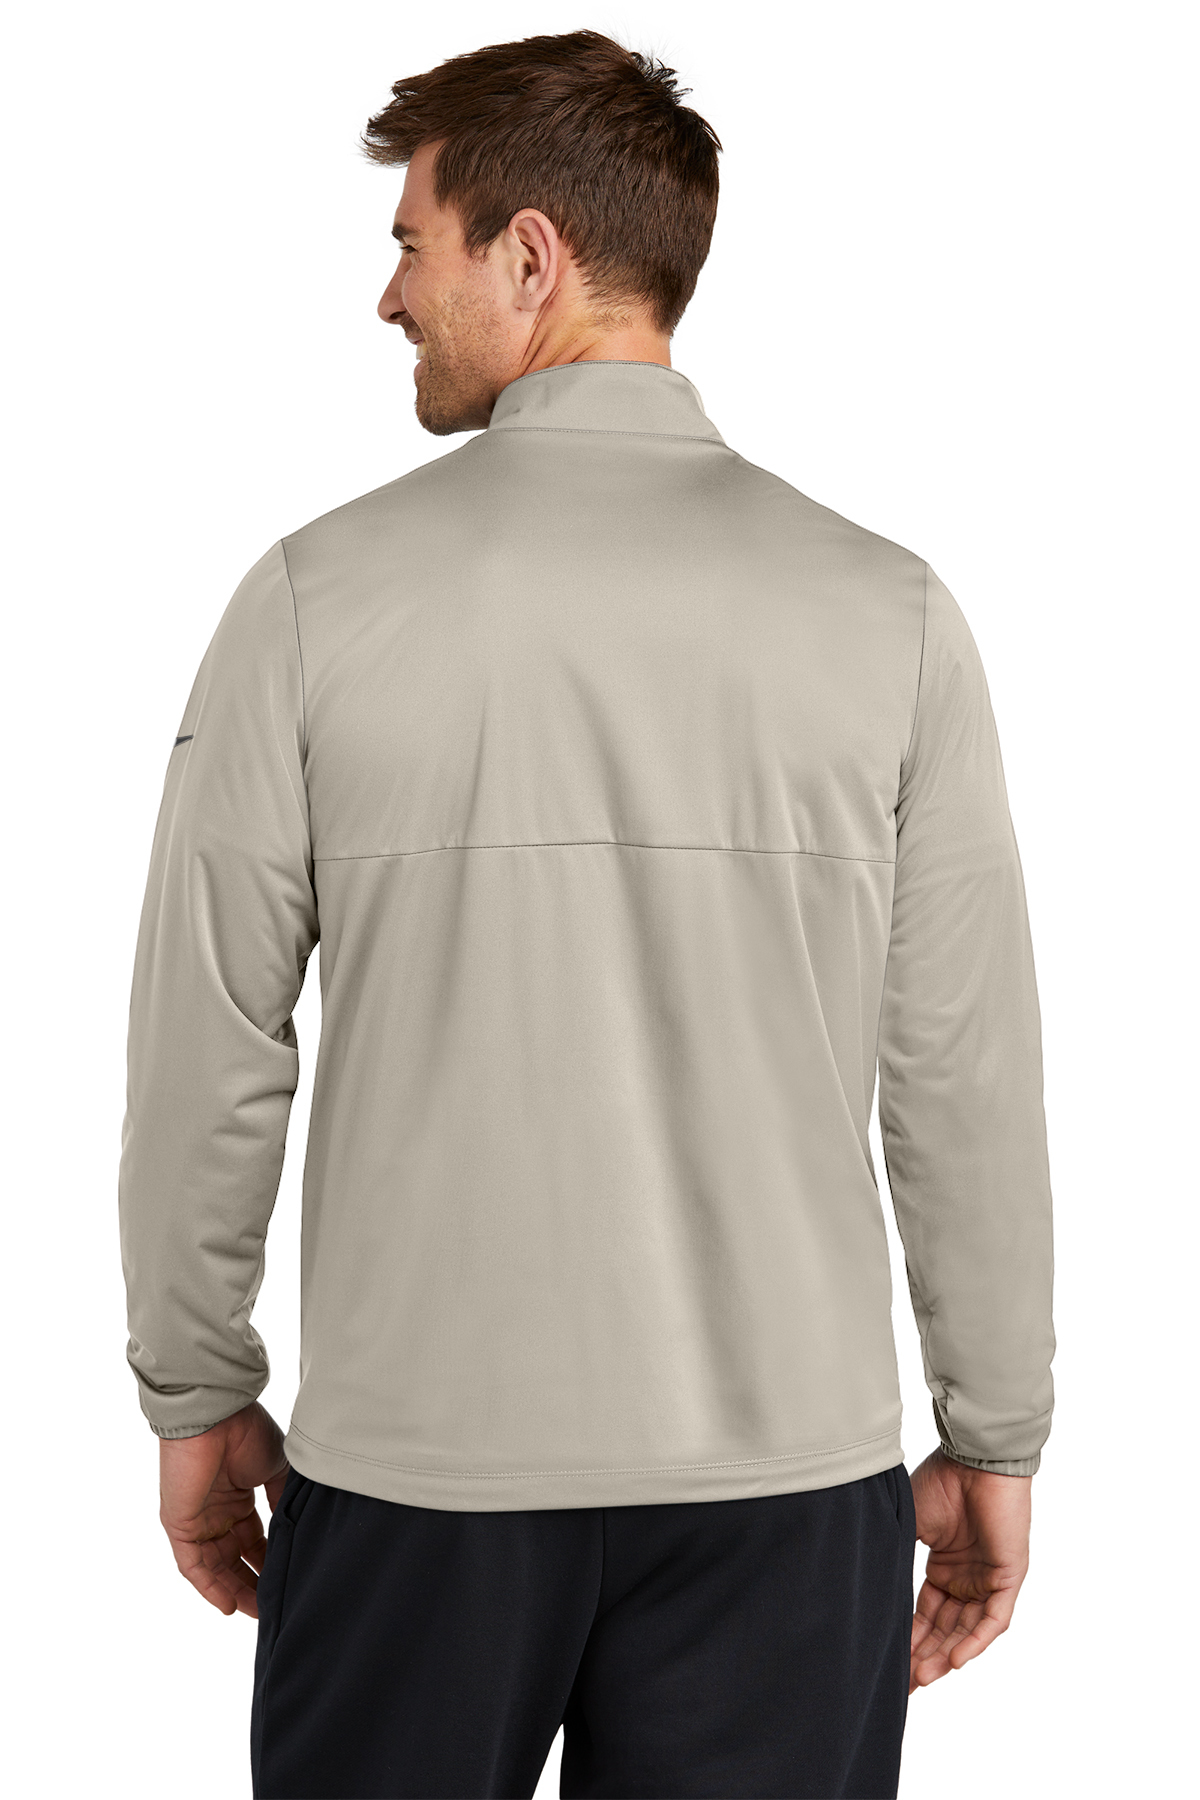 Nike Storm-FIT Full-Zip Jacket | Product | SanMar